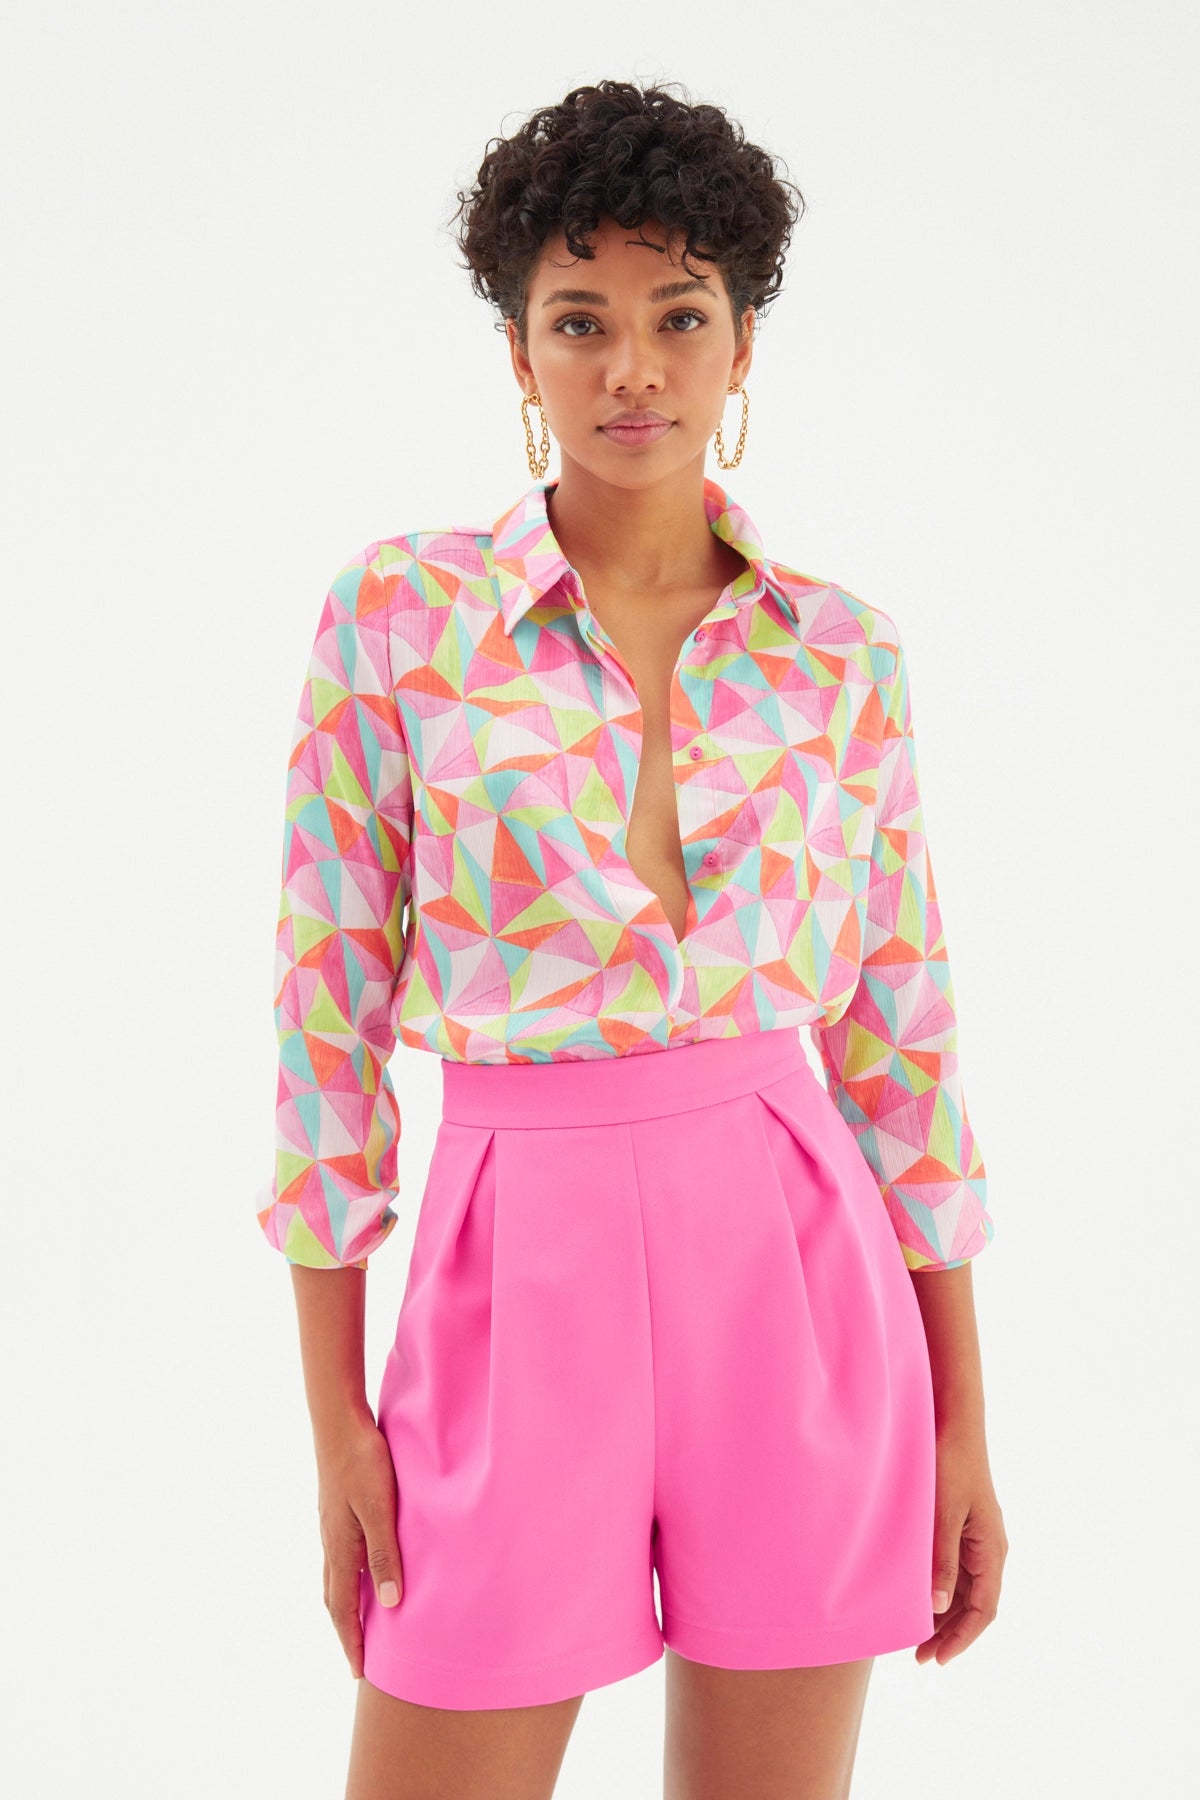 Prism Patterned Shirt - Pink-Multi